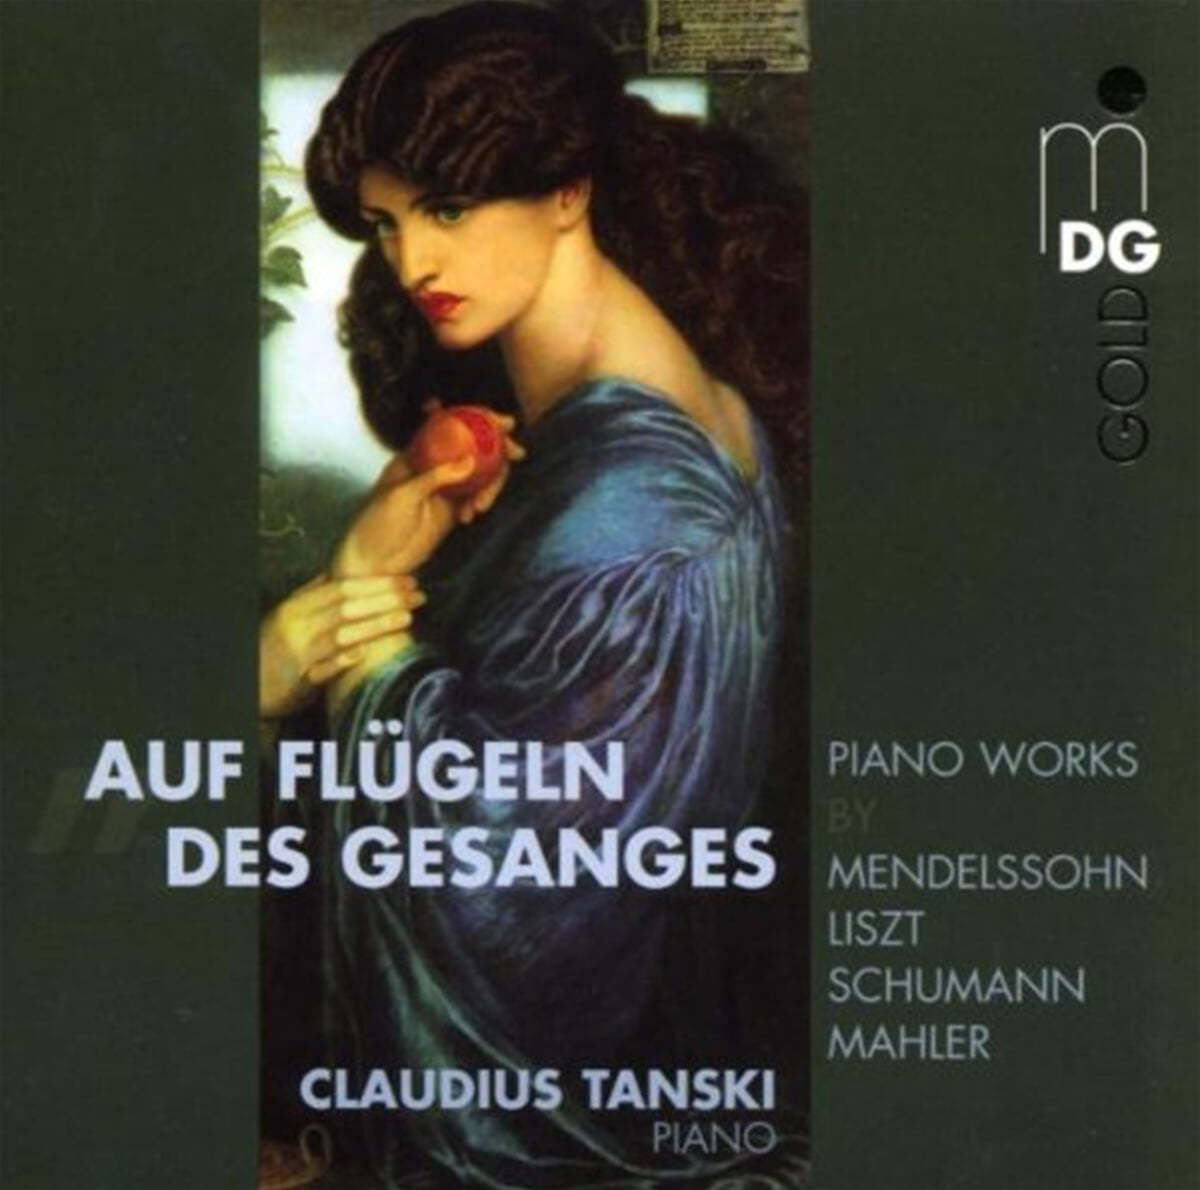 Claudius Tanski 노래의 날개 위에 - 피아노로 연주하는 낭만가곡들 (Auf Flugeln Des Gesanges - Piano Works) 